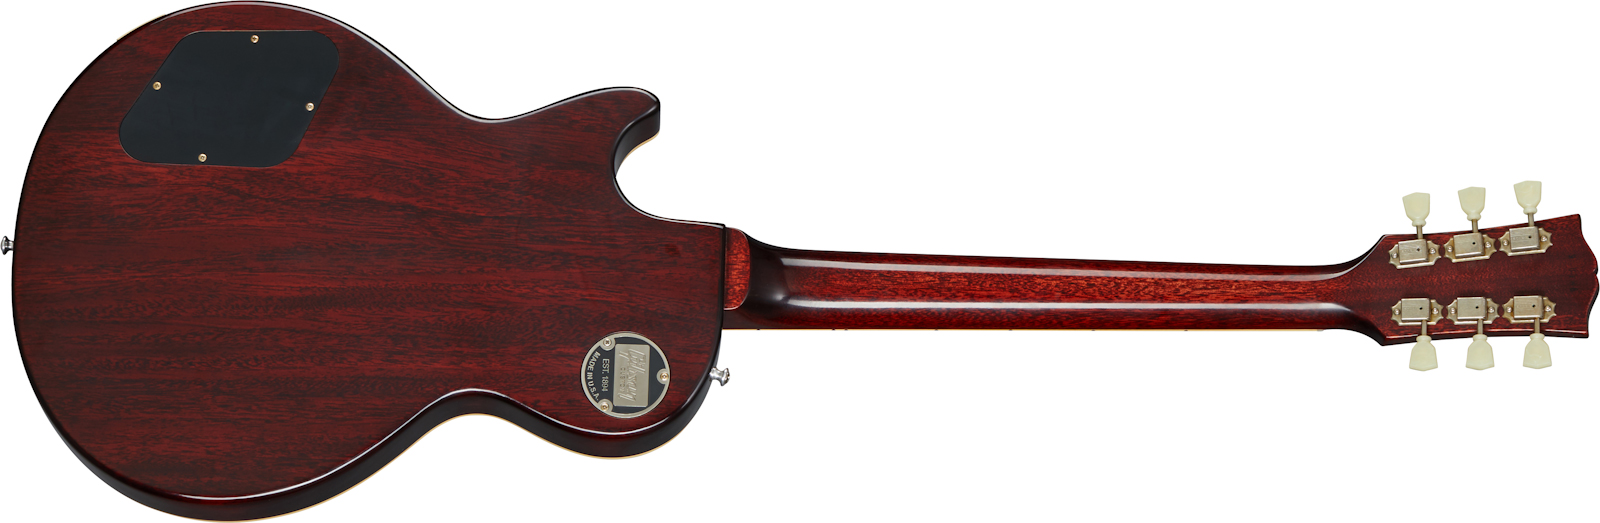 Gibson Custom Shop Les Paul Standard 1959 Reissue 2020 2h Ht Rw - Vos Dirty Lemon - Single cut electric guitar - Variation 1